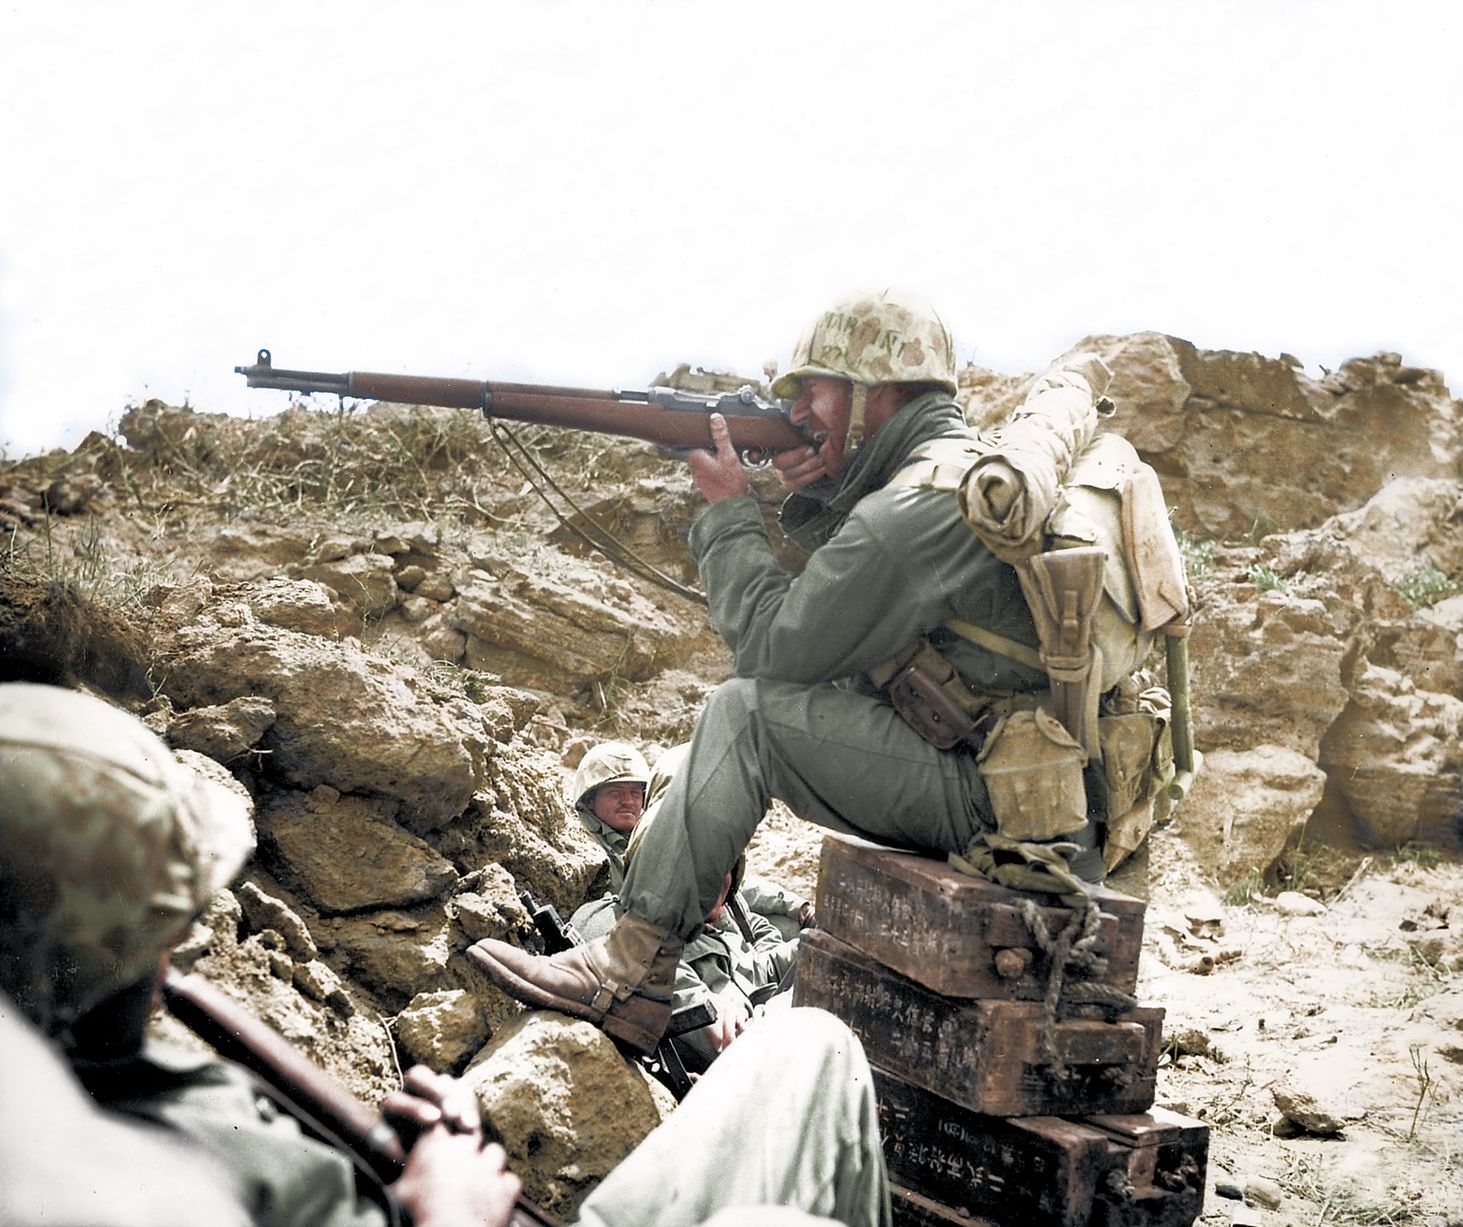 A US marine takes aim while sitting on Japanese ammunition boxes.